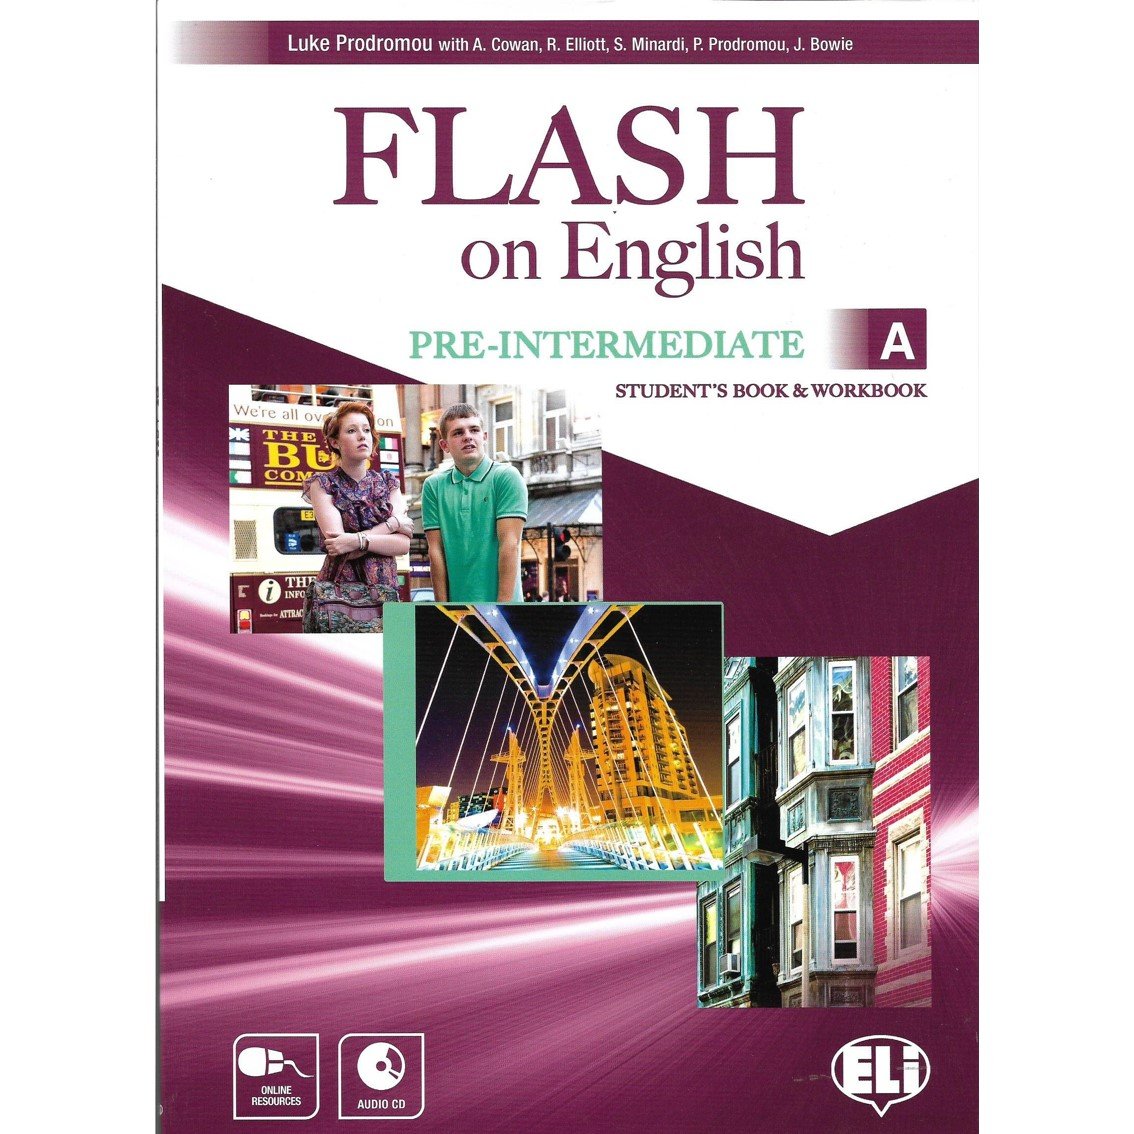 Student book 5 класс 2 часть. English Intermediate student's book. Pre Intermediate. English pre Intermediate. English student's book Intermediate 2020.